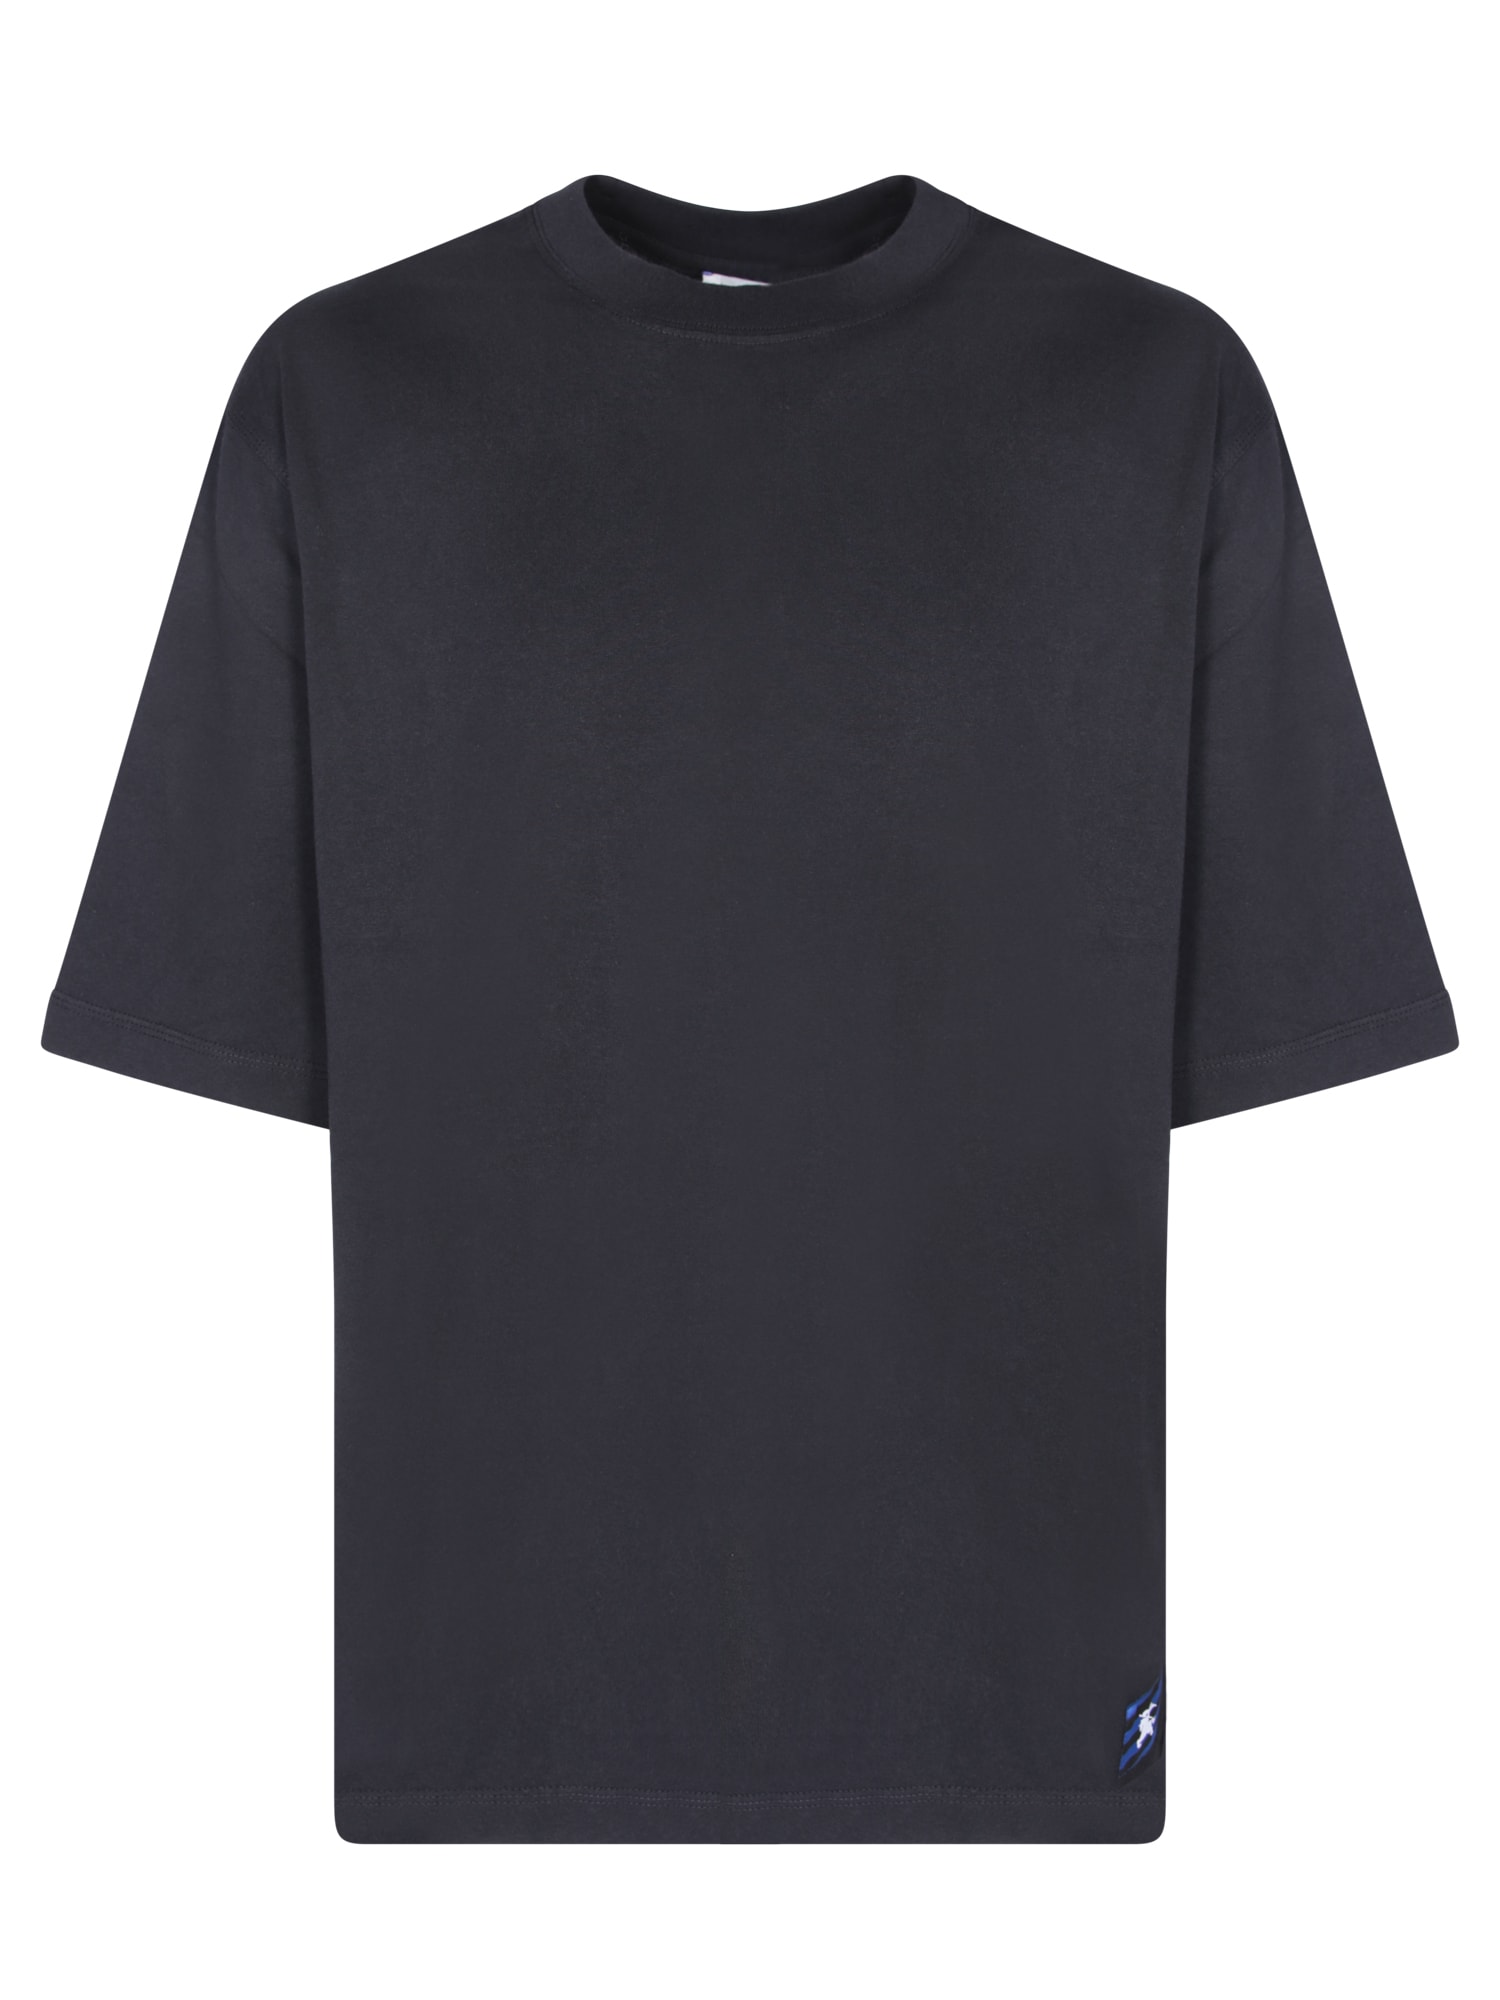 Burberry Short Sleeve Black T-shirt